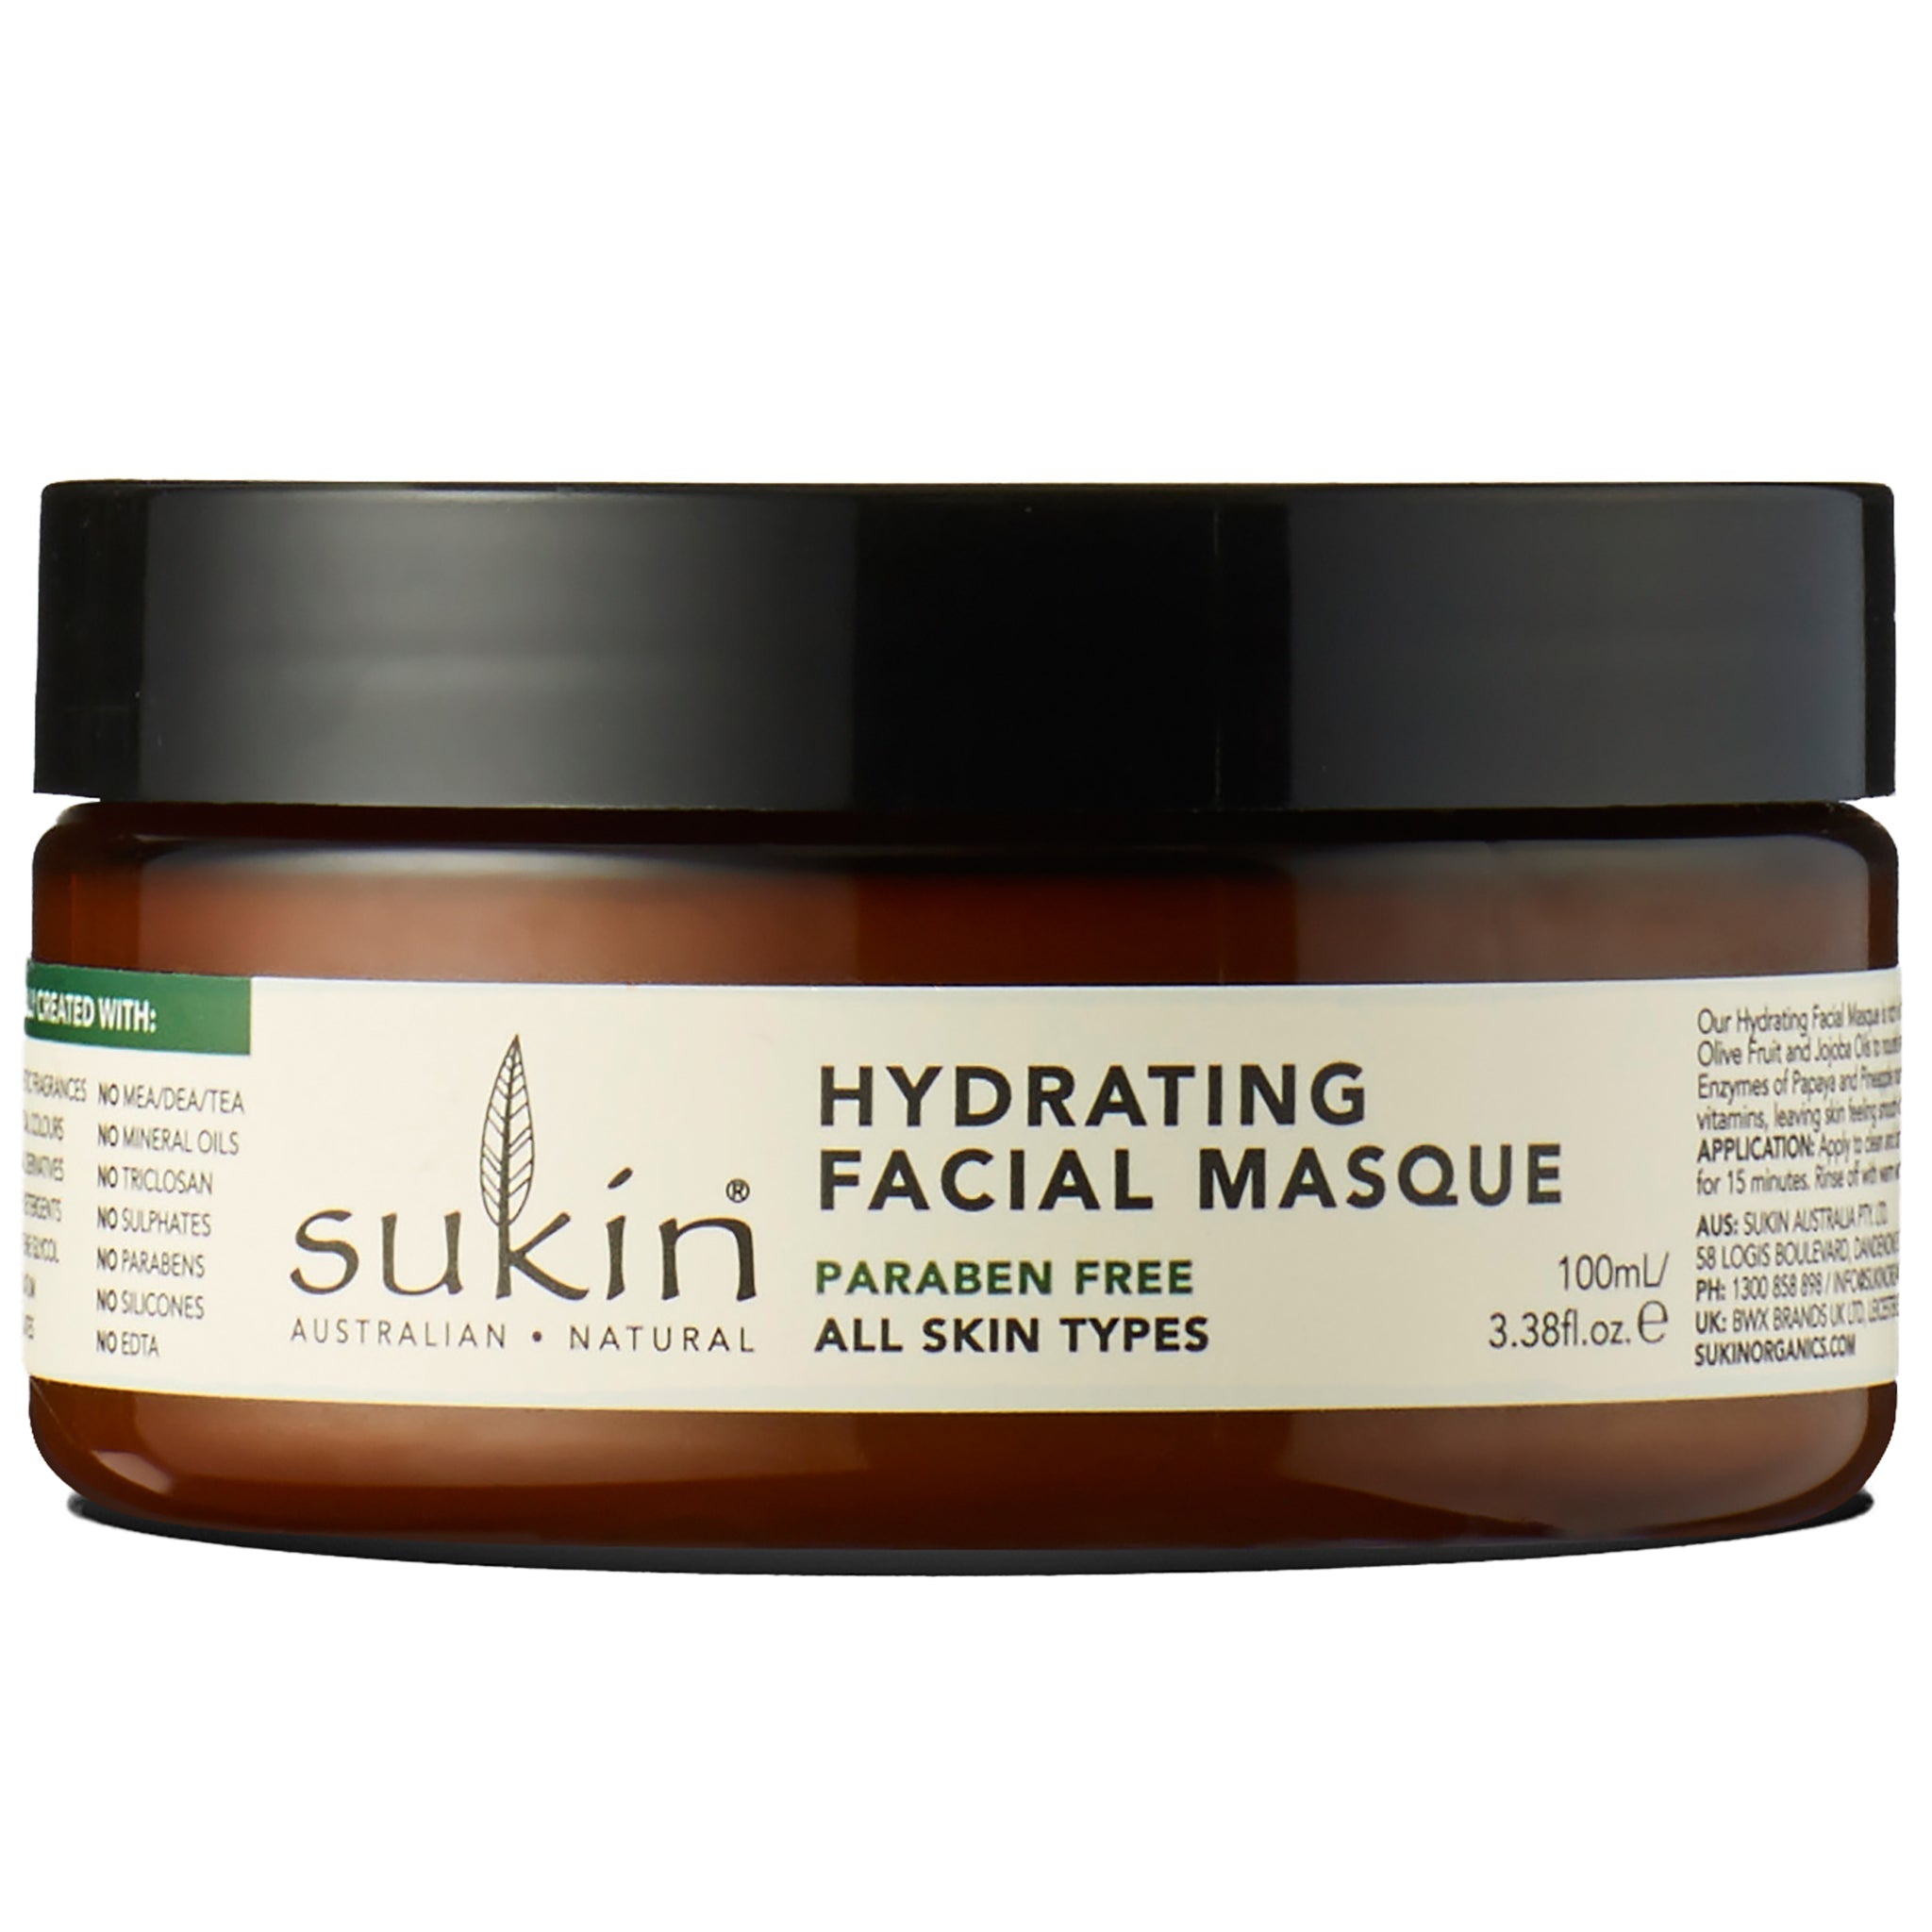 Hydrating Facial Masque - mypure.co.uk